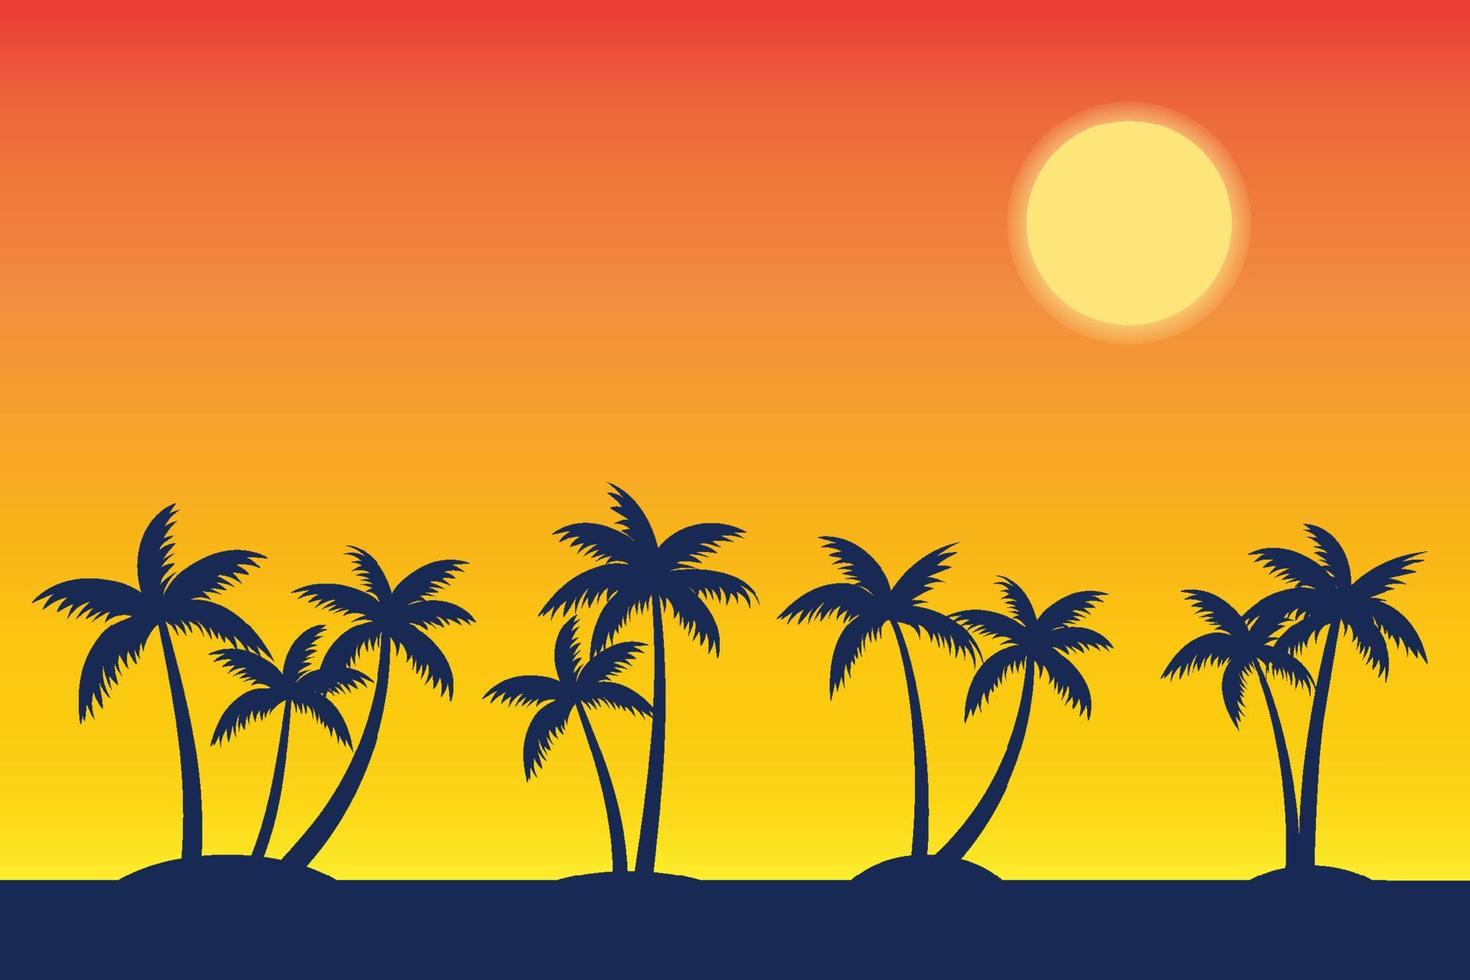 zomer tropisch strand achtergrond met palmen boom zeegezicht zonsopgang en zonsondergang. vector